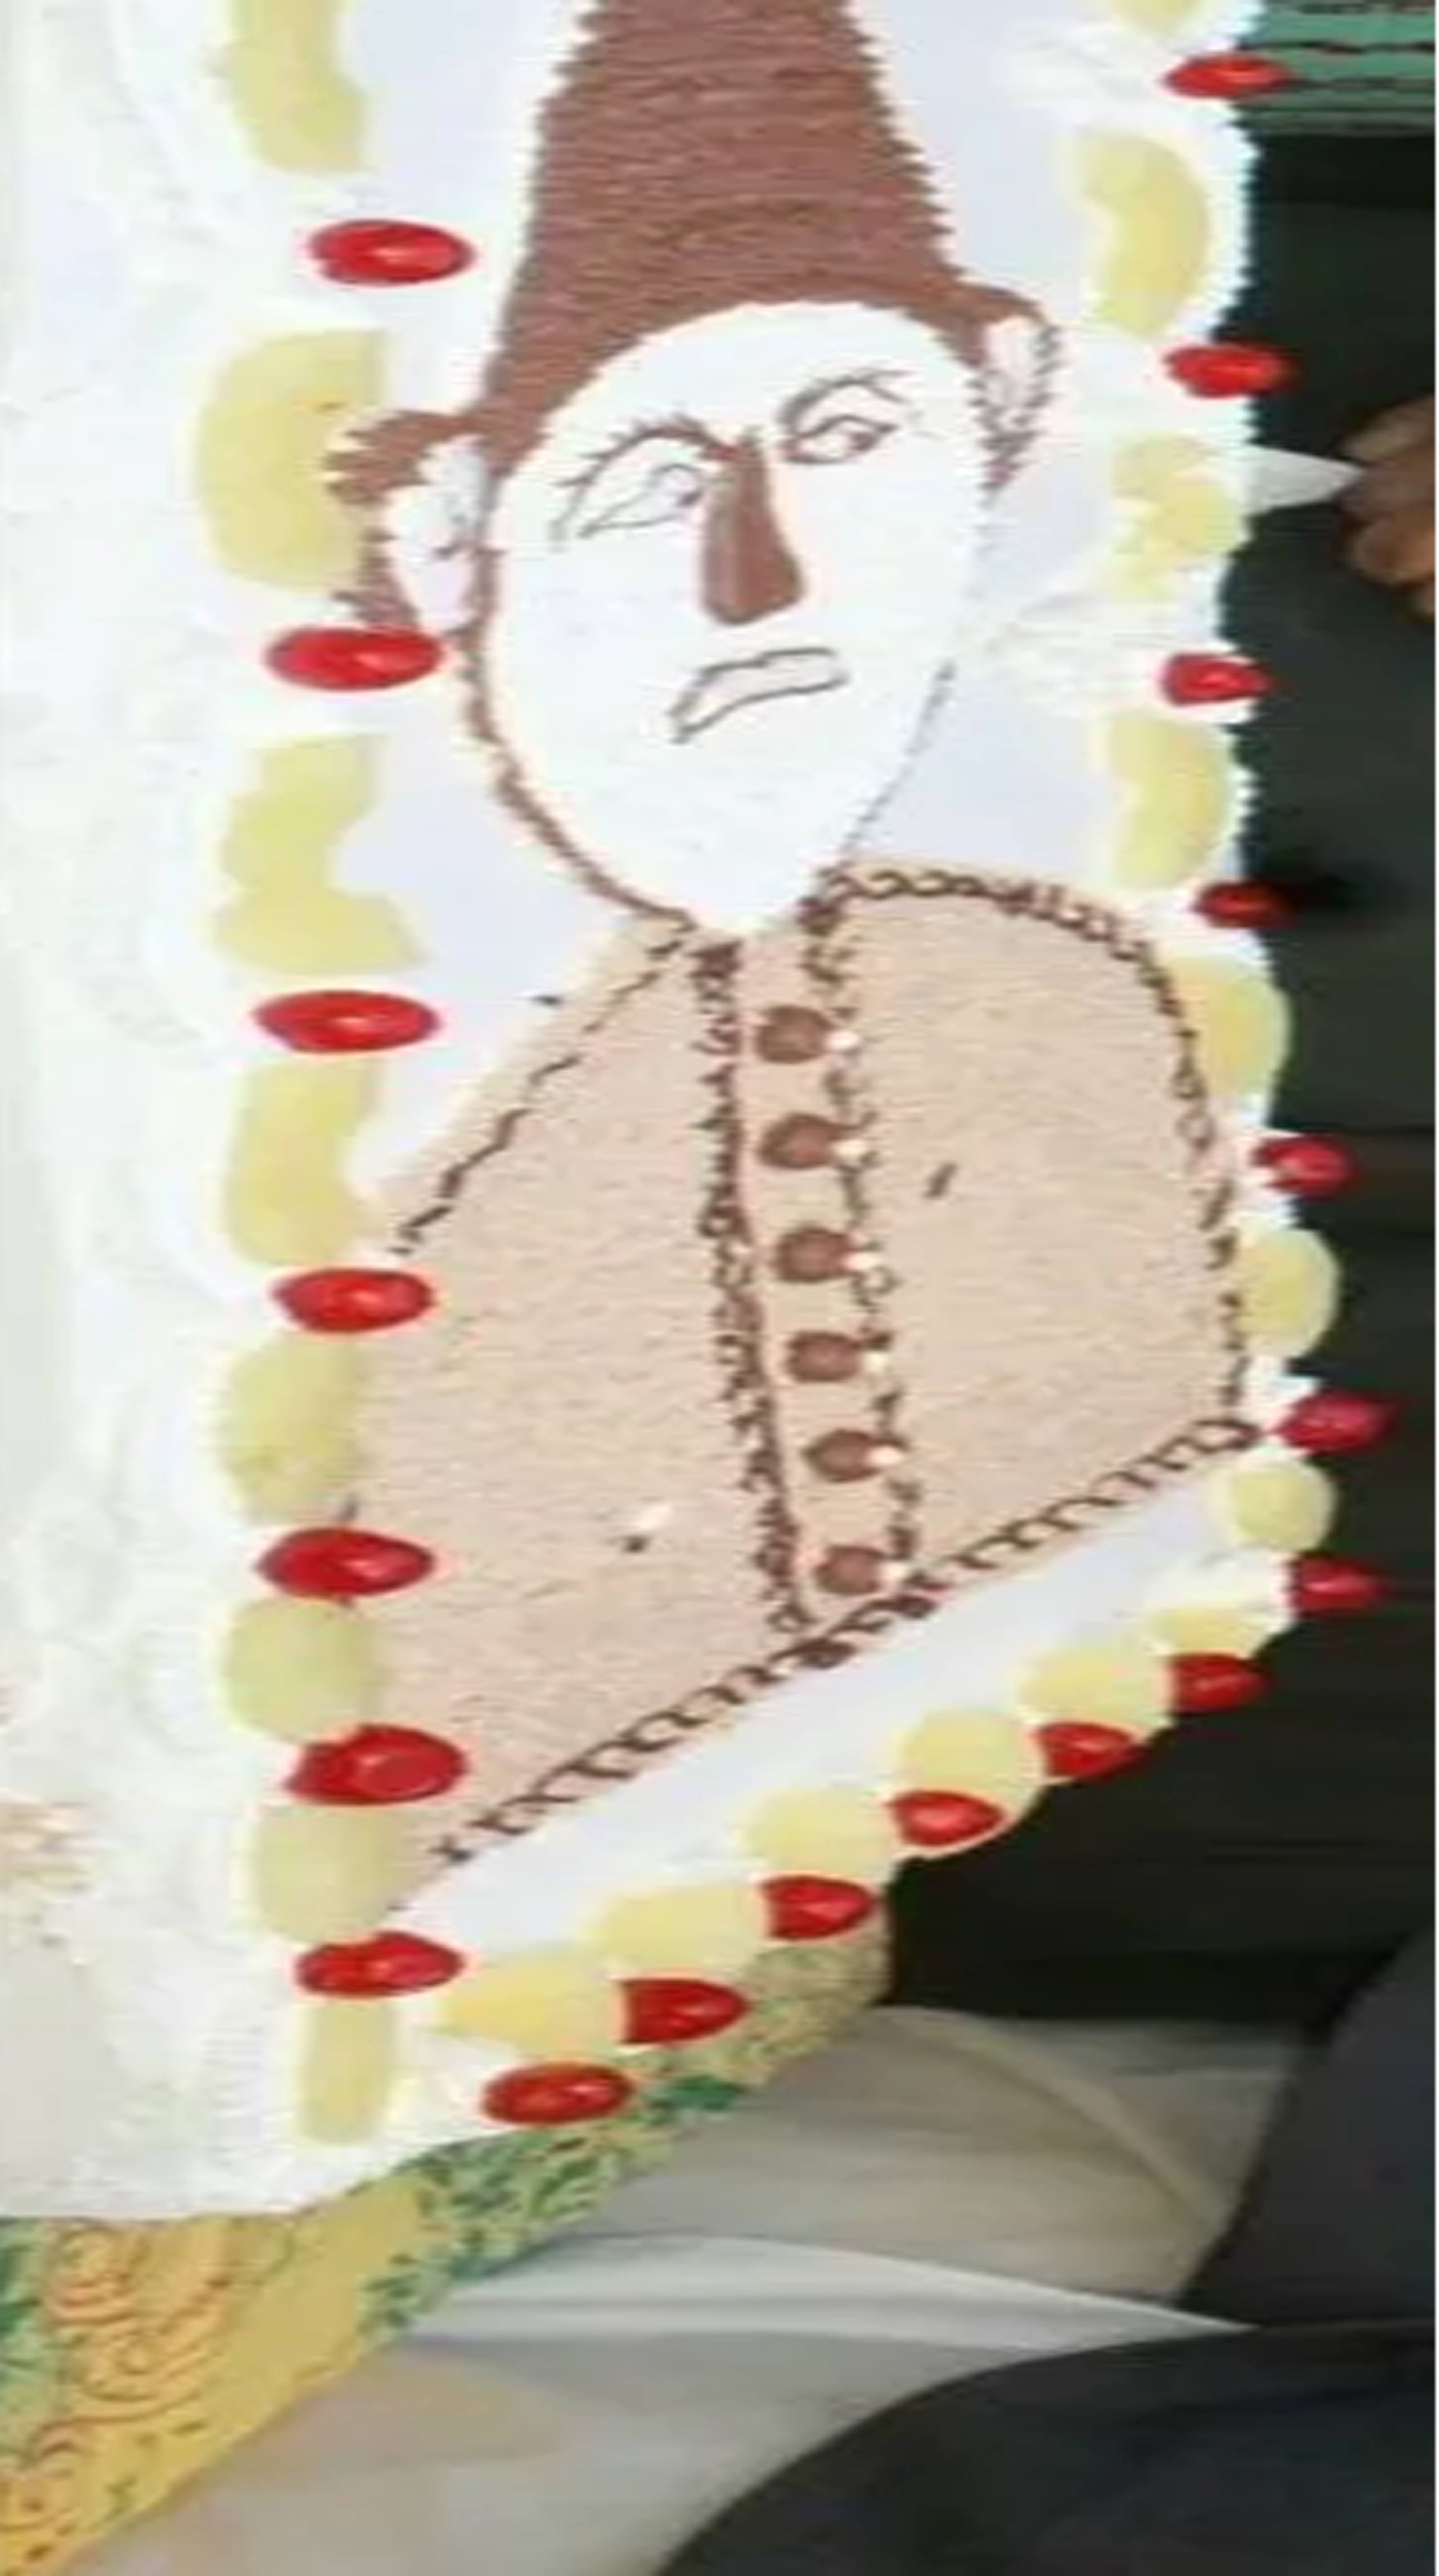 Arif Alvi cut a bizarre cake on Quaid's birthday and it's freaking ... - 346617609 1572331823 627426153